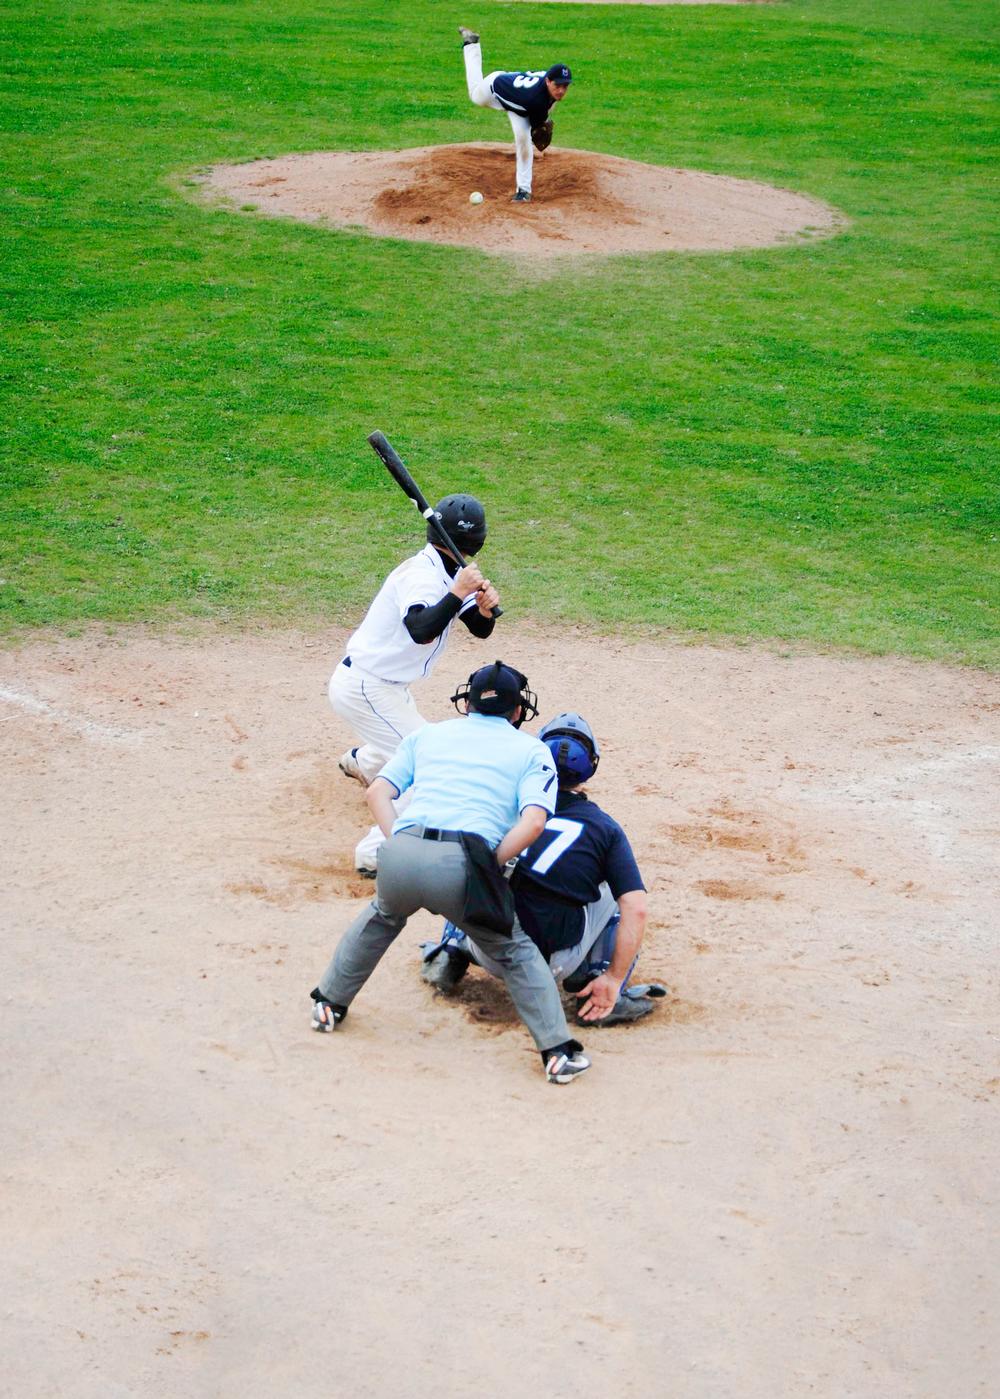 Baseball and softball / PA Archive/Press Association Images